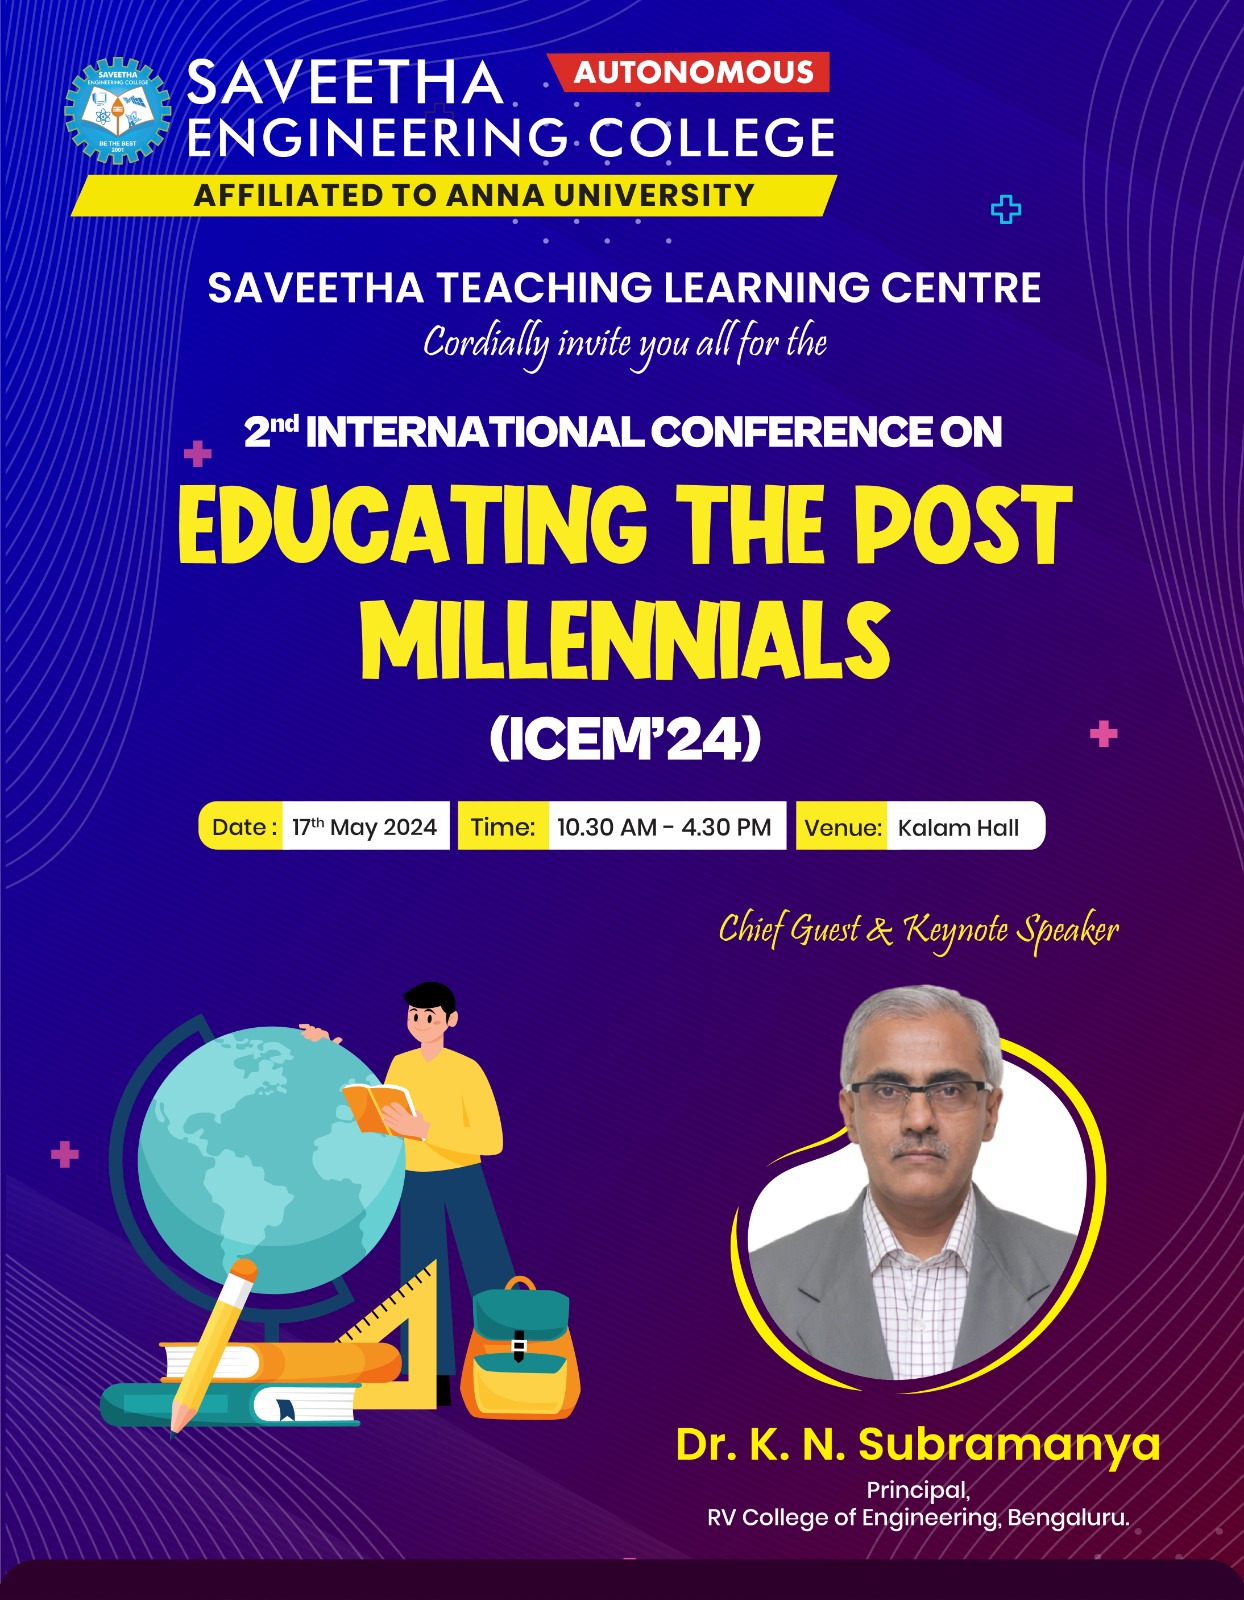 Educating the Post Millennials ICEM24 seminar at Saveetha Engineering College EDITED